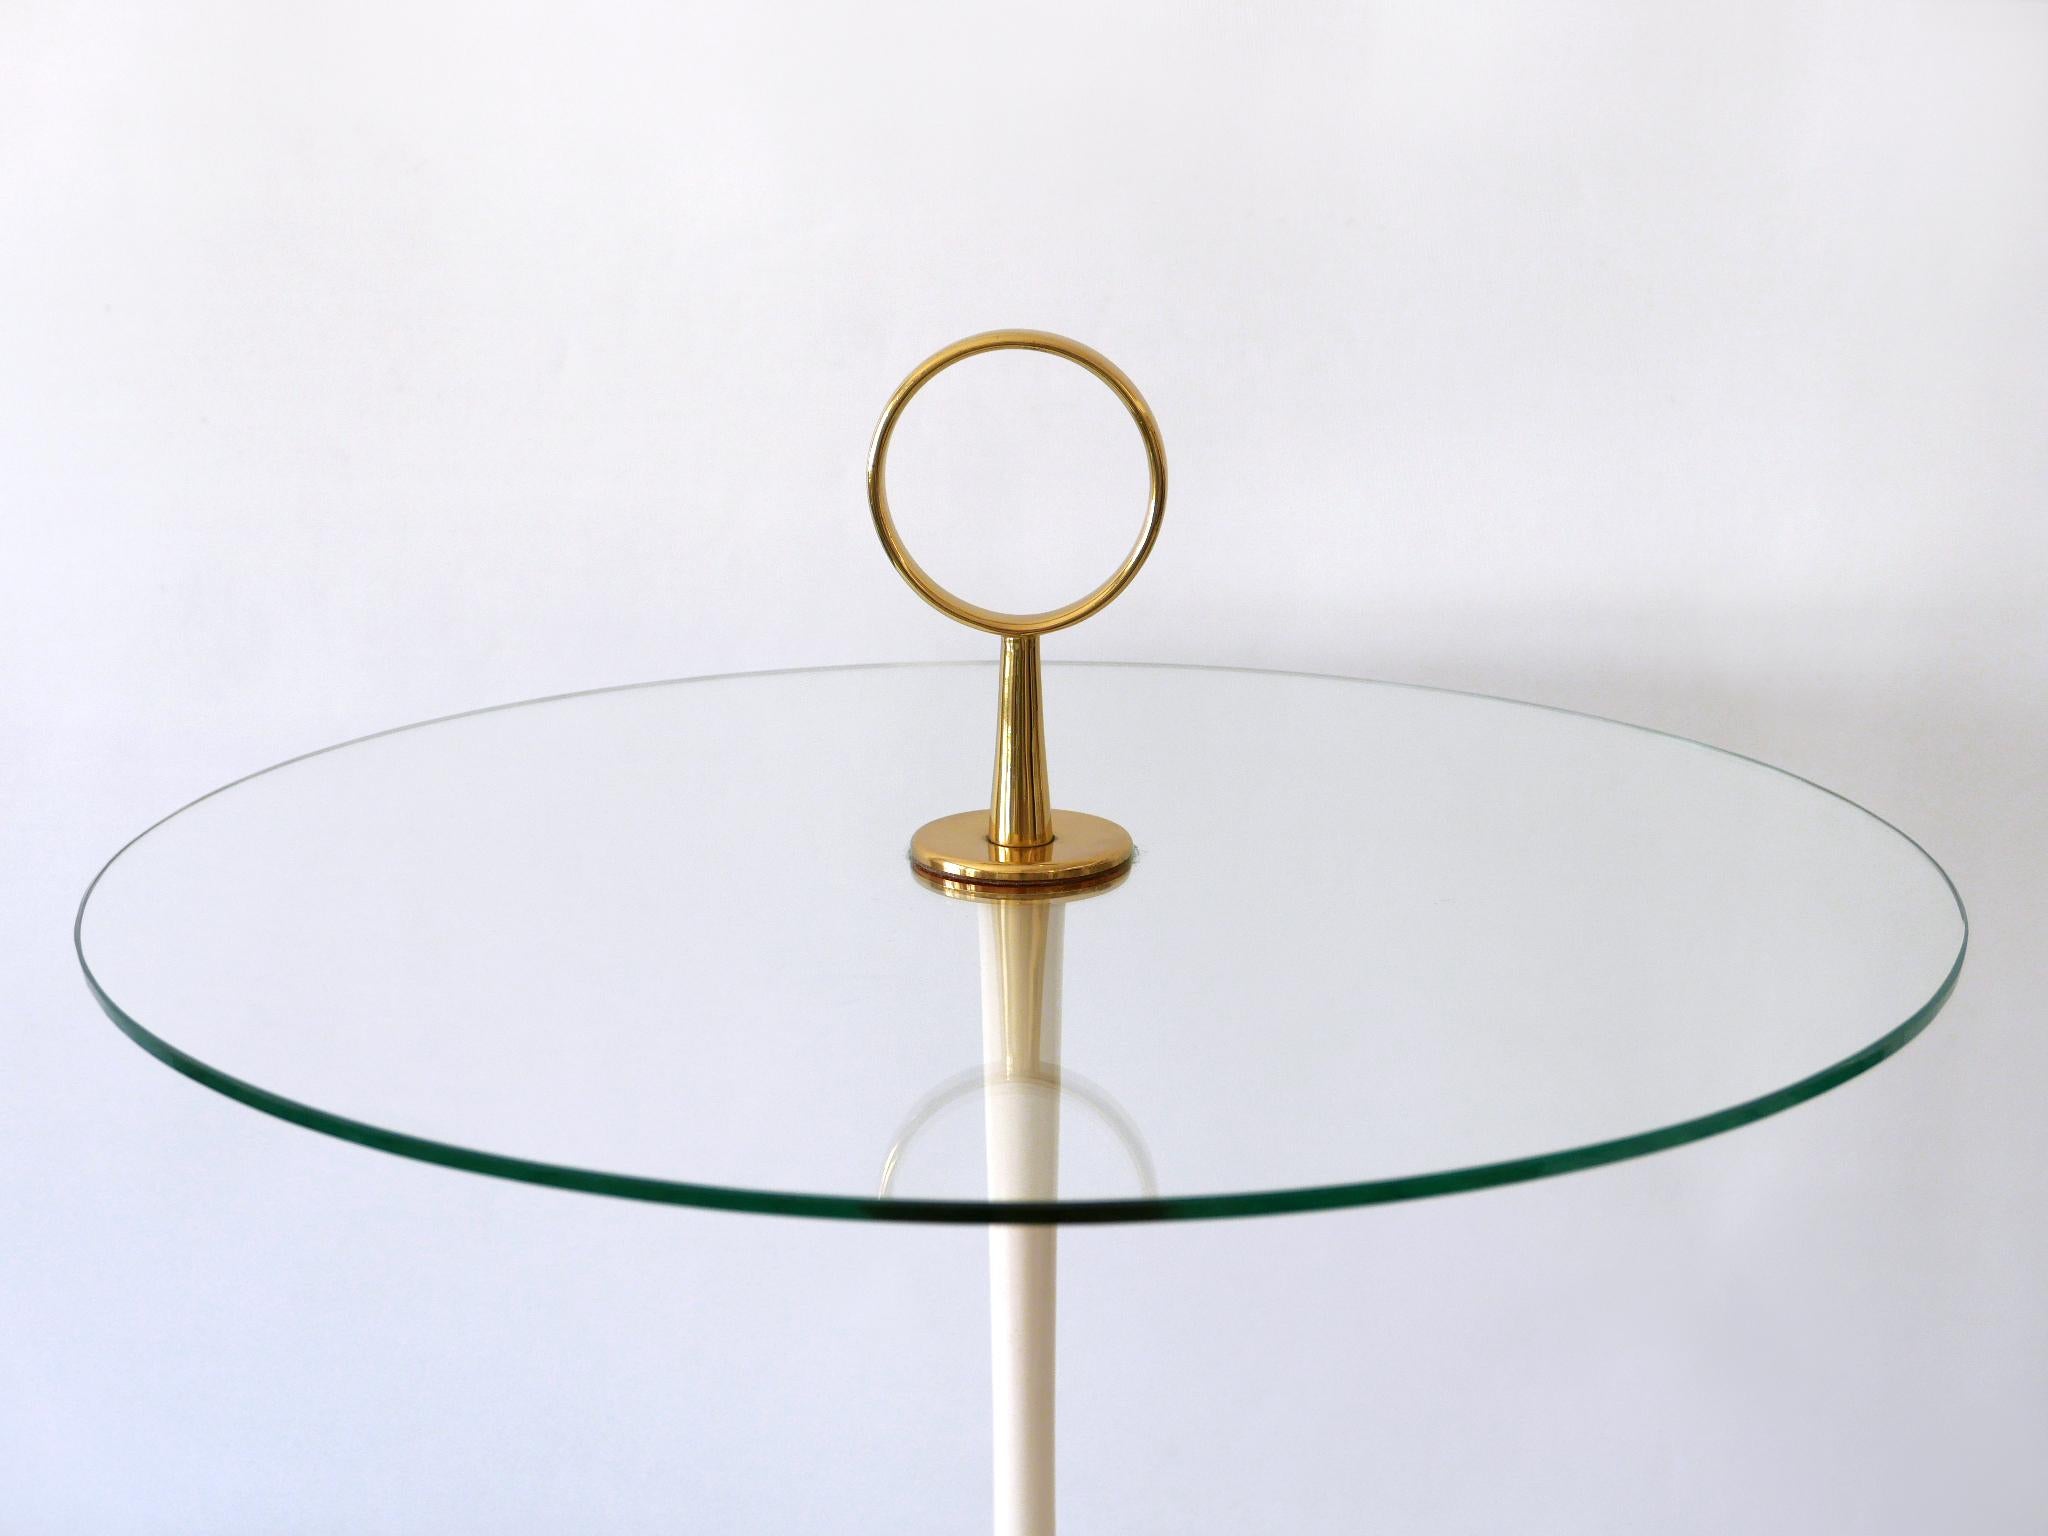 Elegant Mid-Century Modern Side Table by Vereinigte Werkstätten Germany 1950s For Sale 5